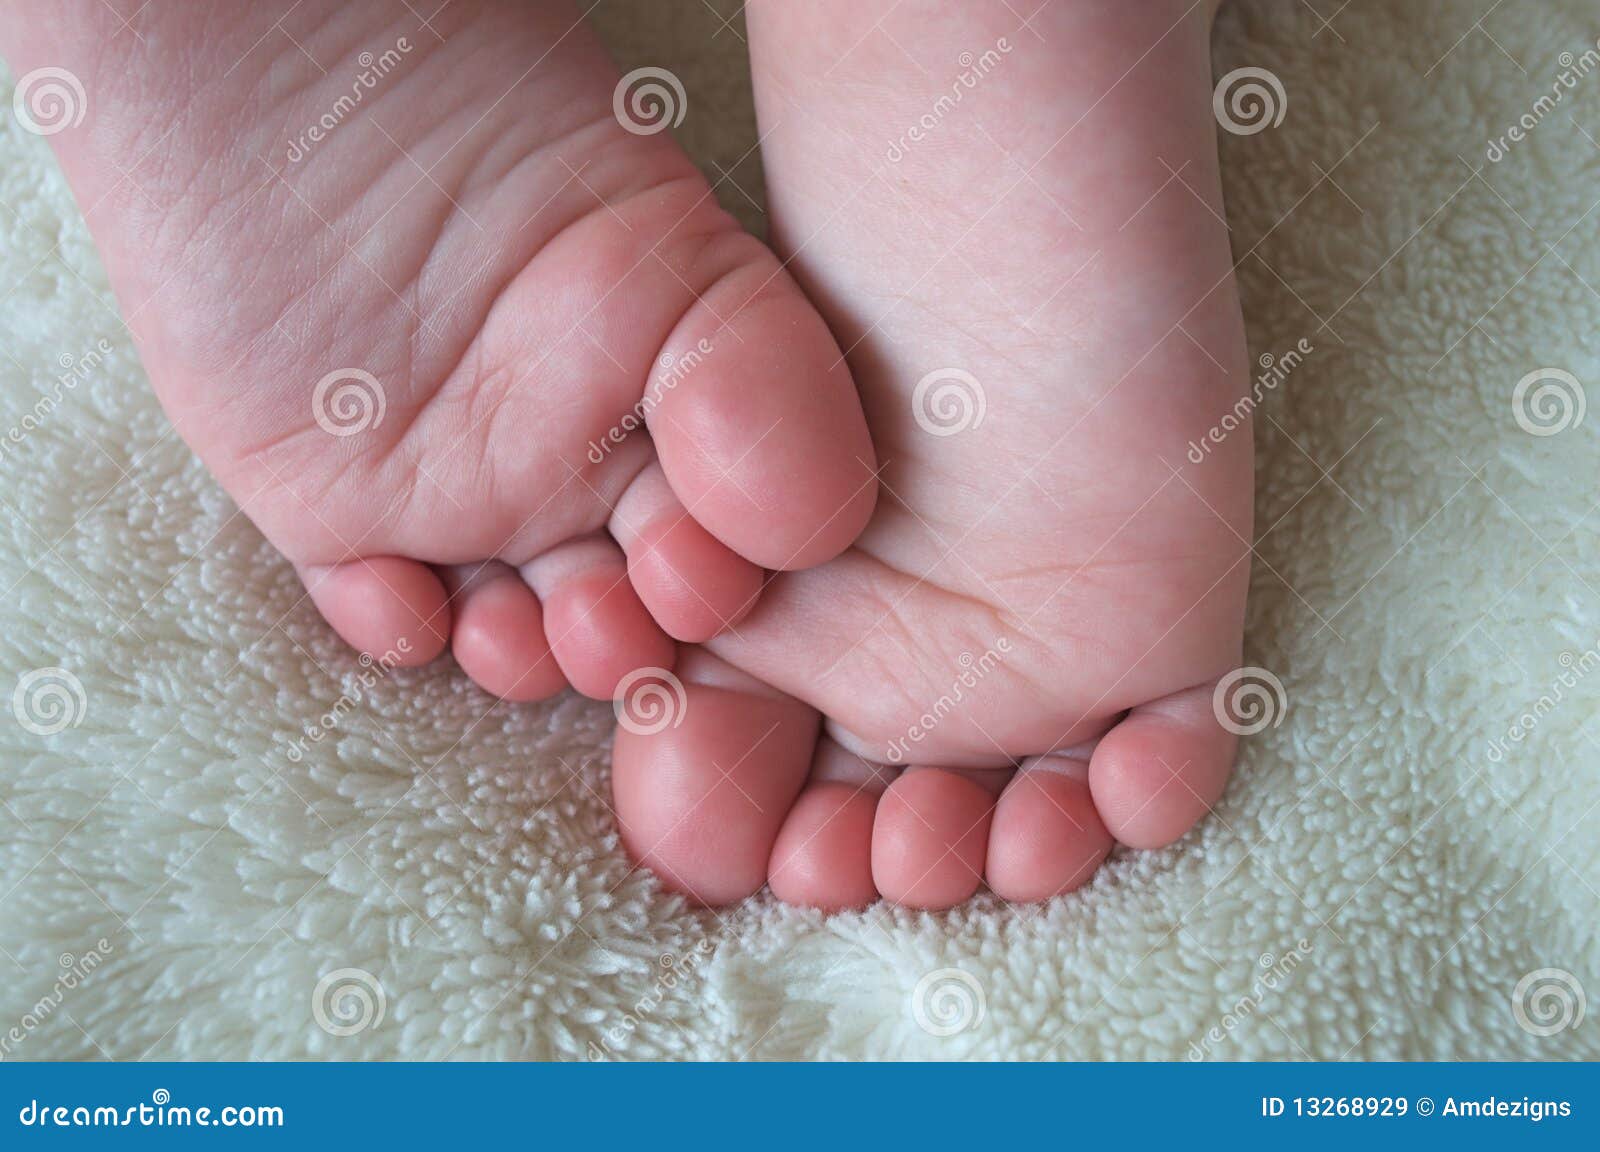 Cutest feet in the world